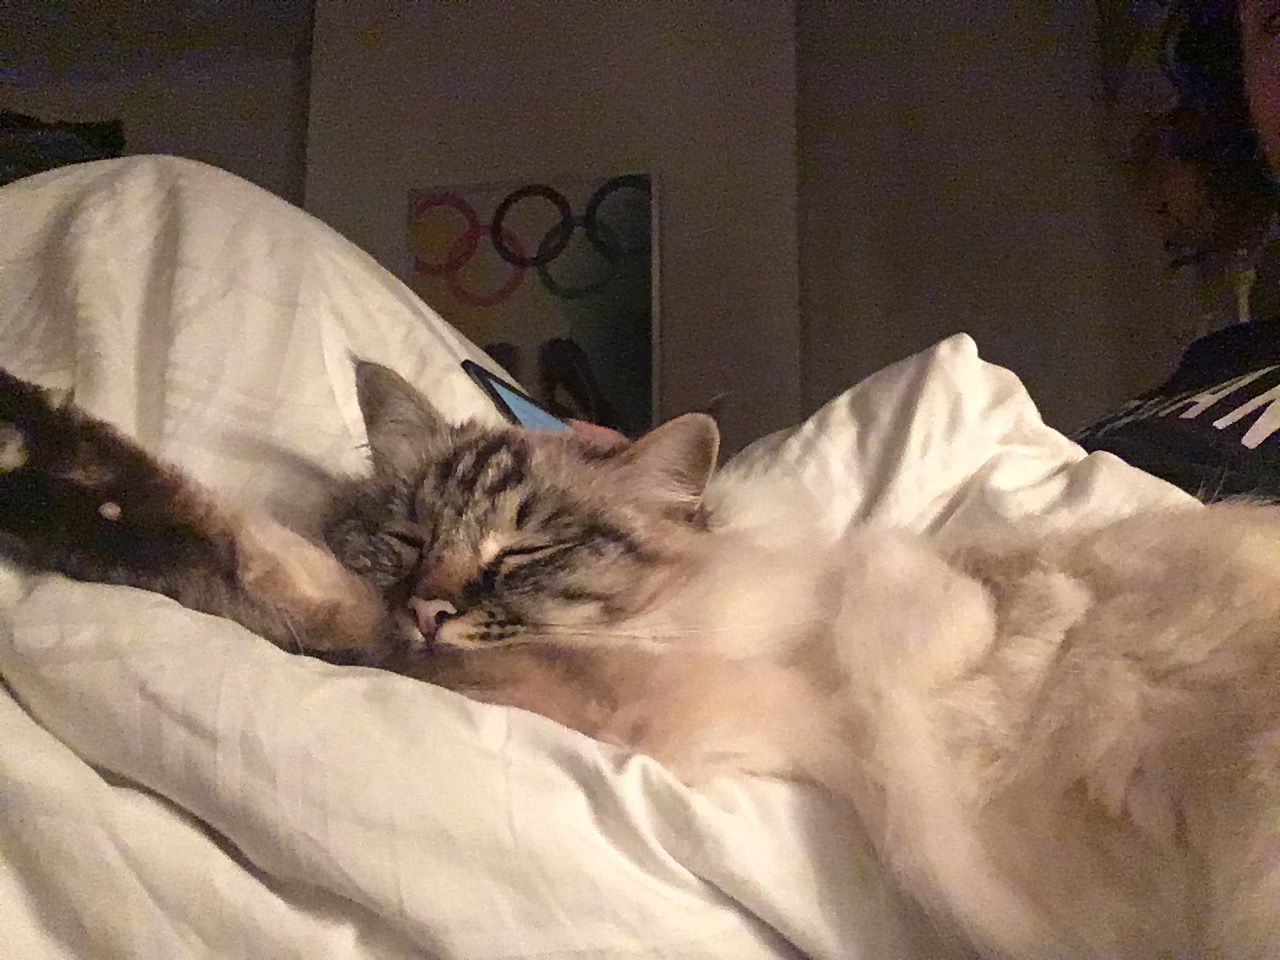 Kiwi sleeping on the bed